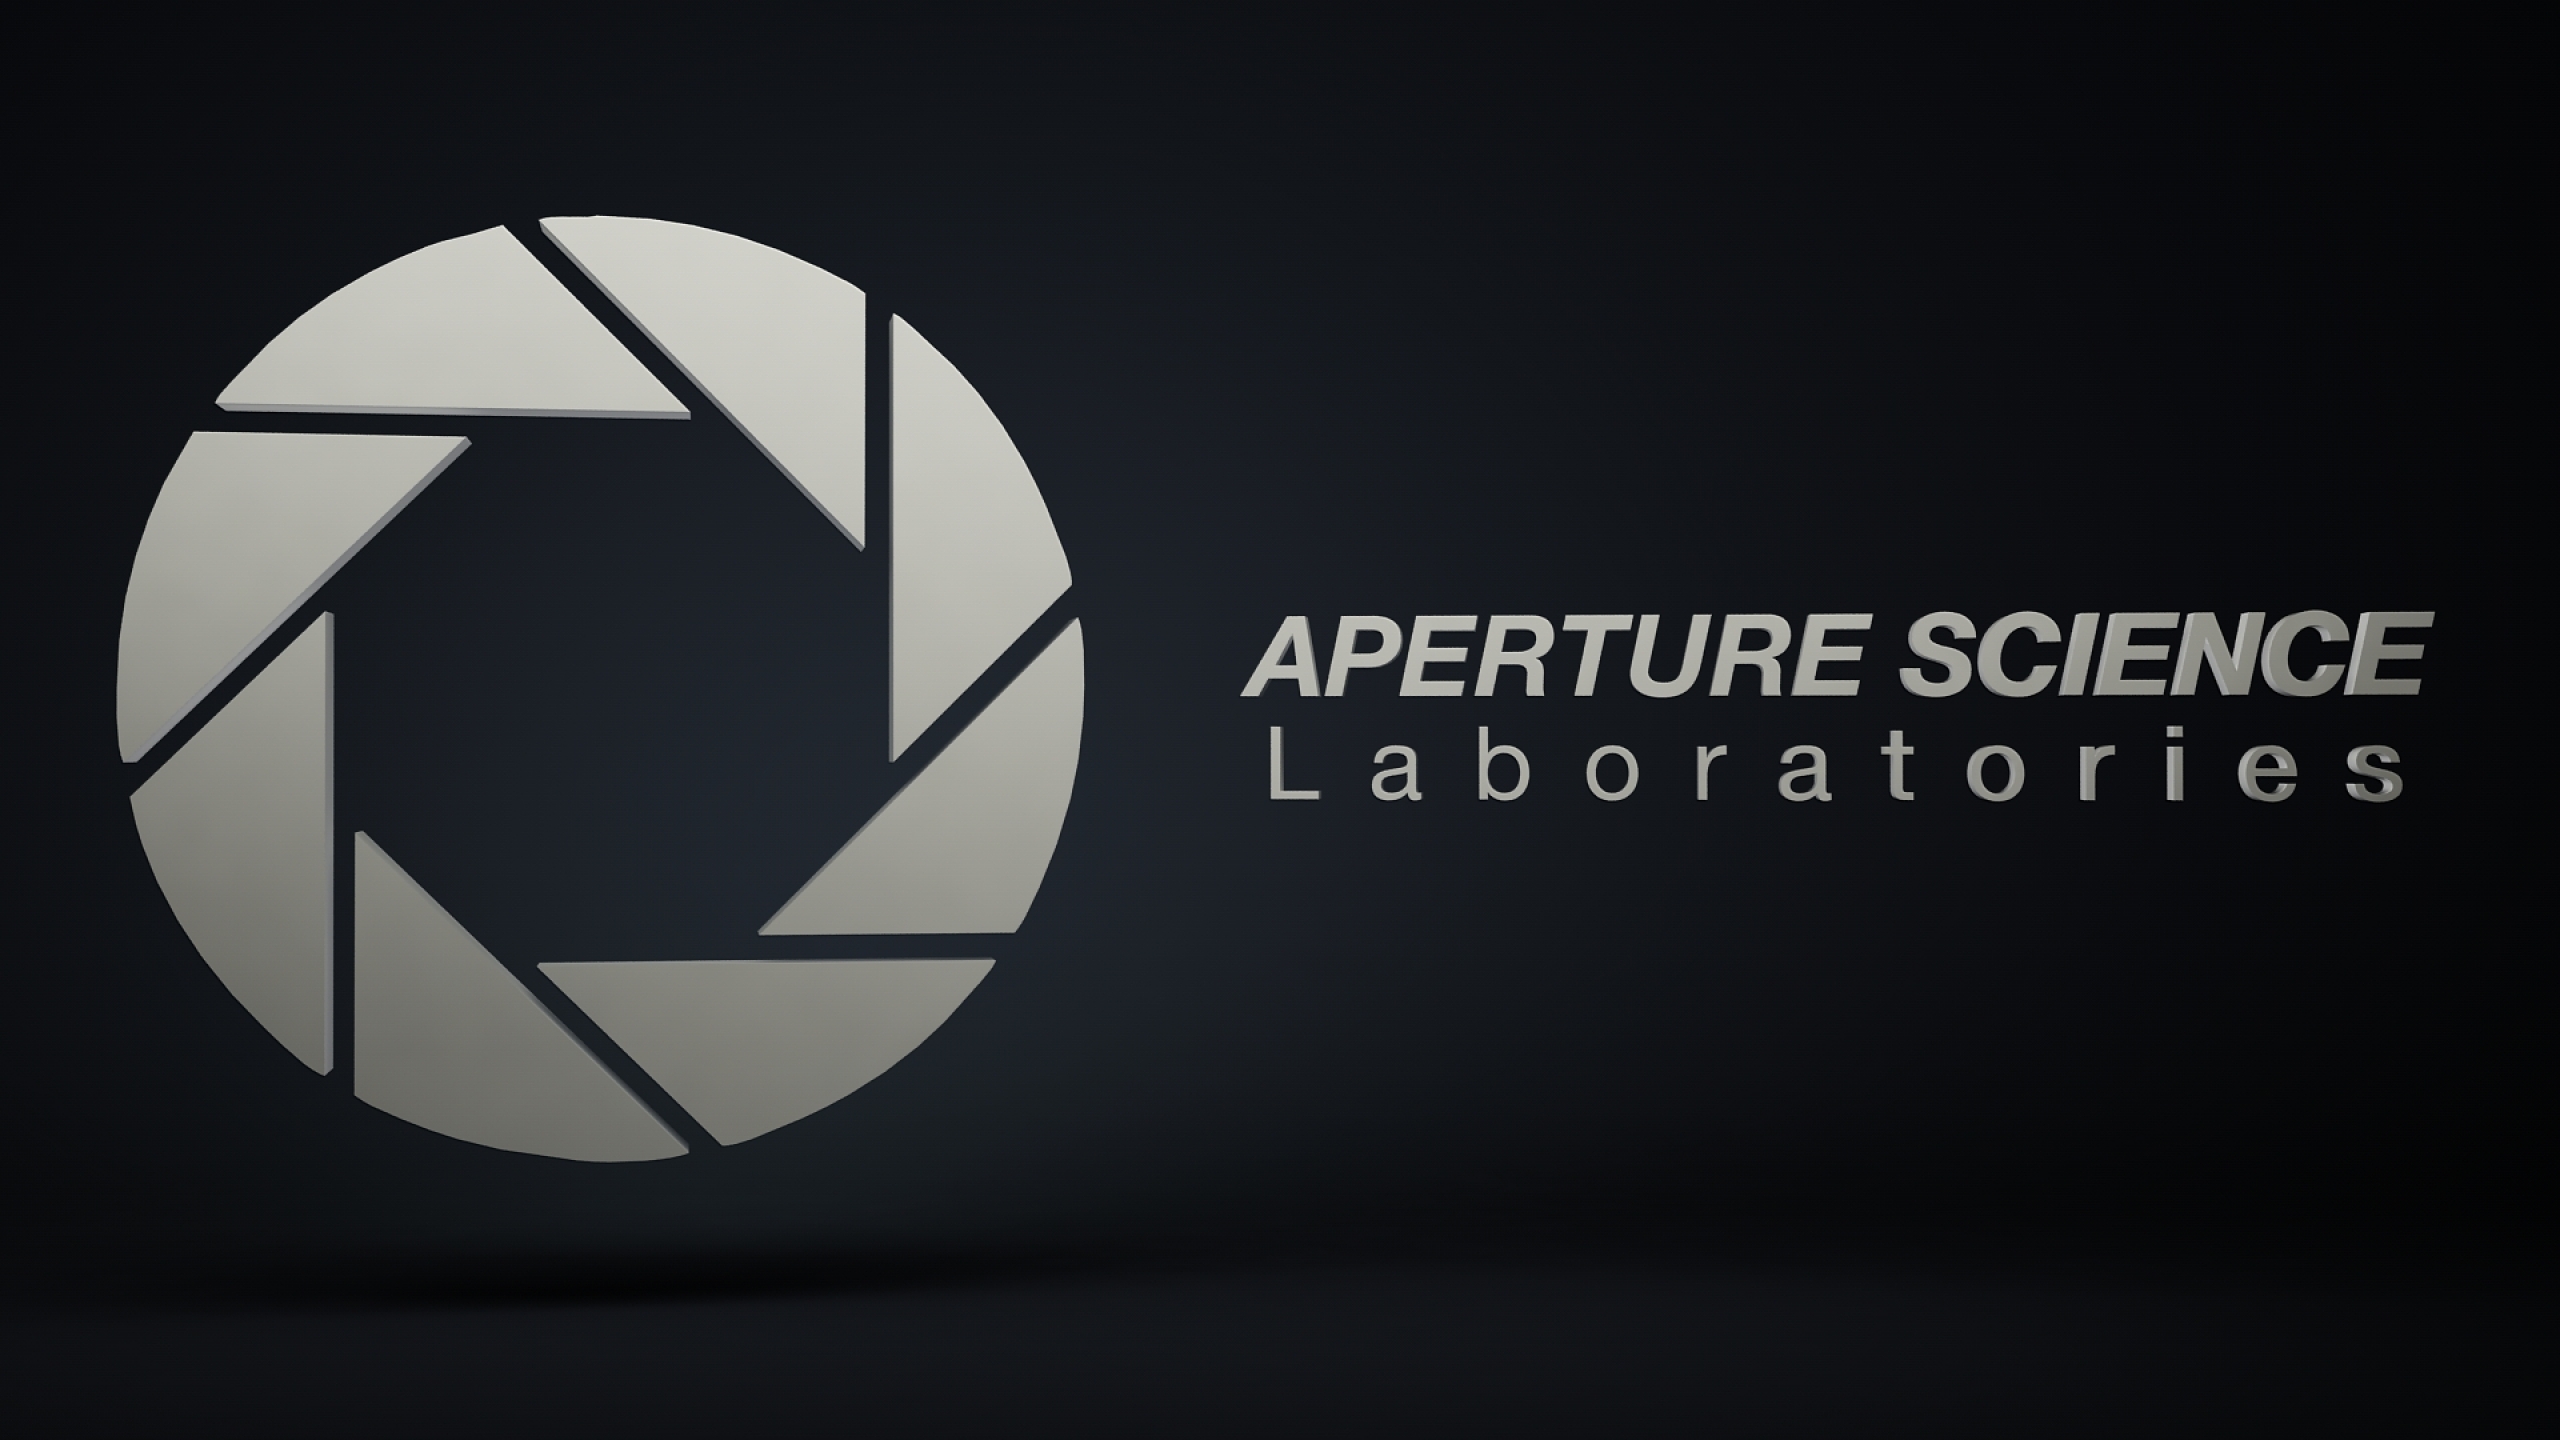  science portal aperture laboratories 1920x1080 wallpaper Wallpaper